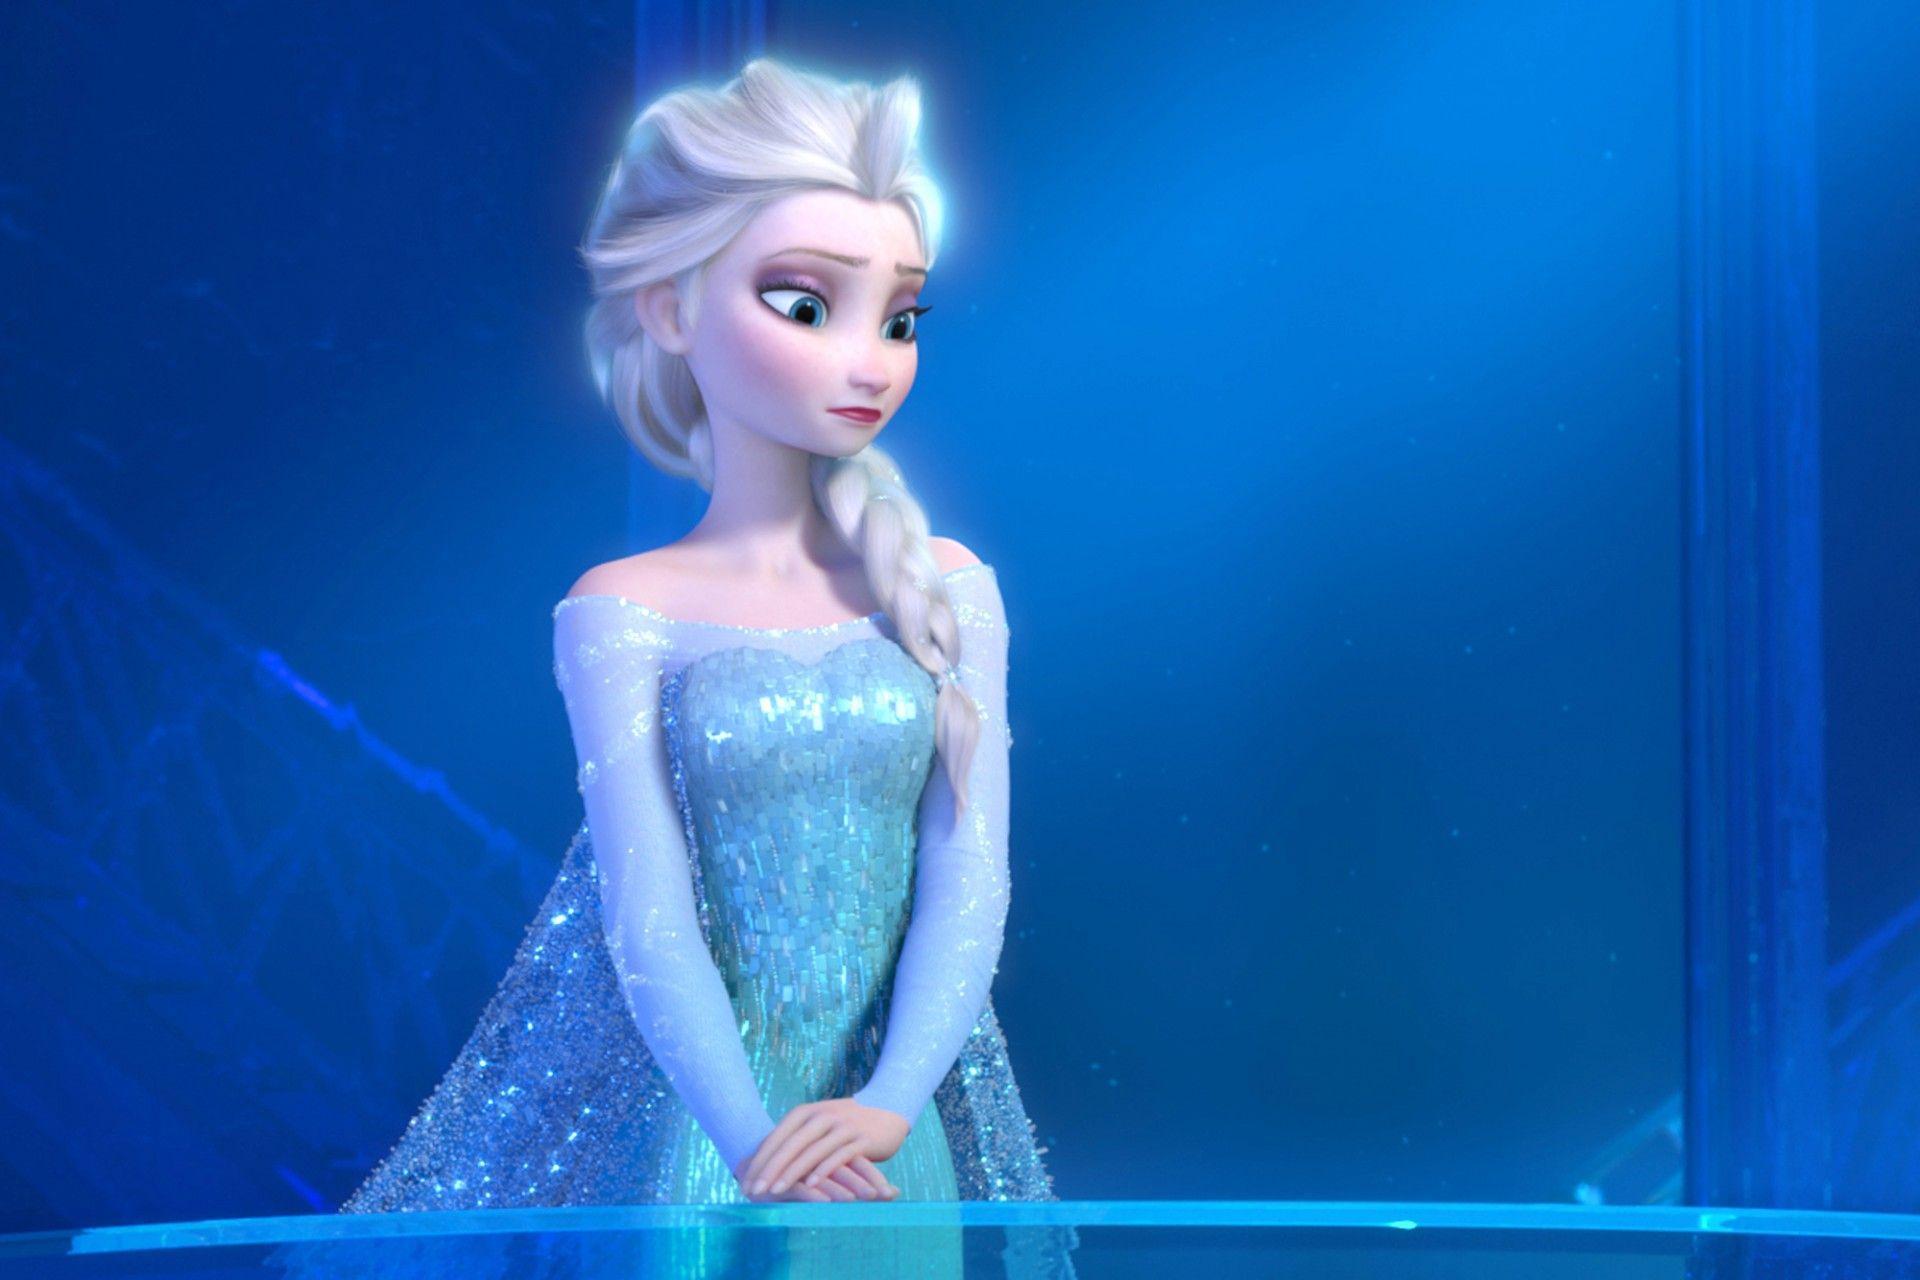 Sad Face Elsa From Disney Frozen Movie Wallpaper. TanukinoSippo